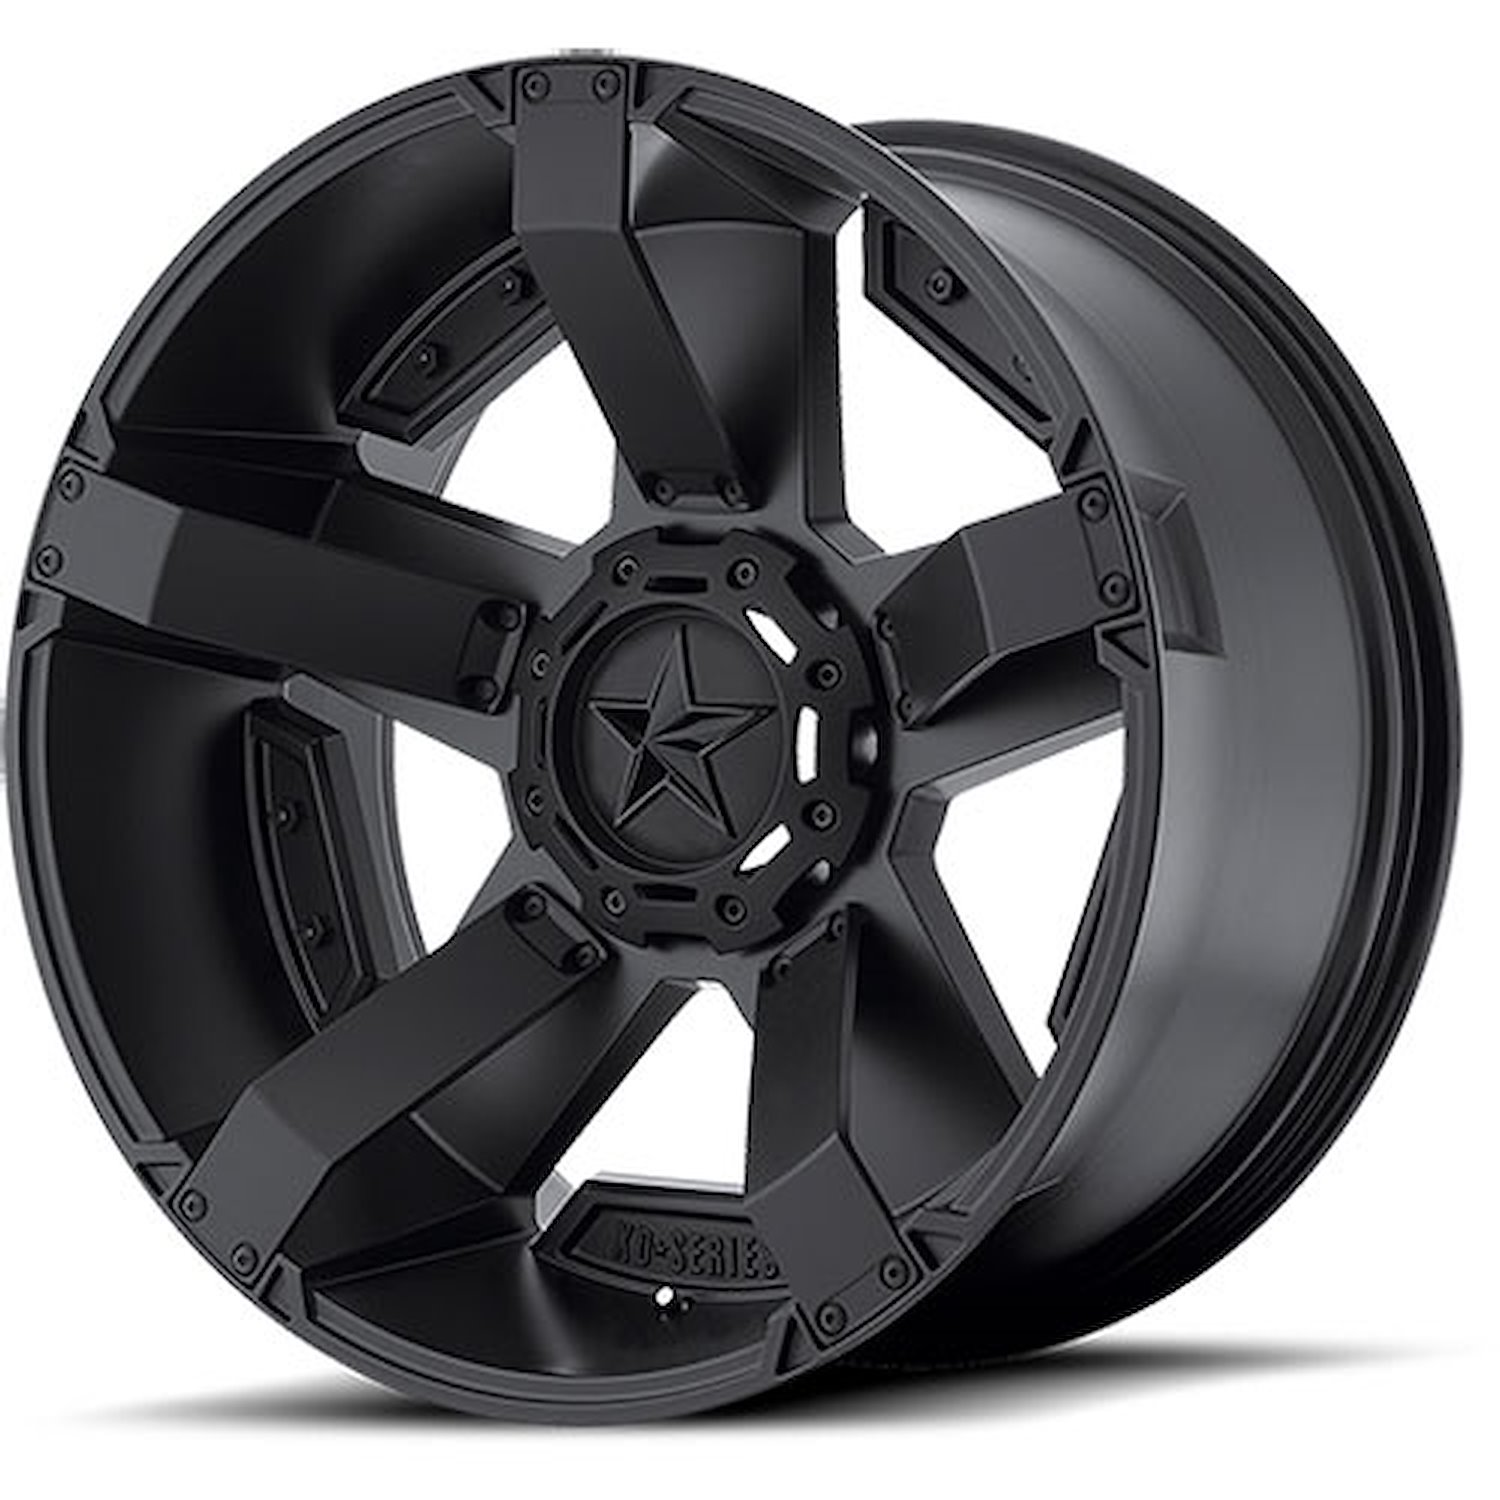 XD811 Series RS2 Rockstar Wheel Size: 18